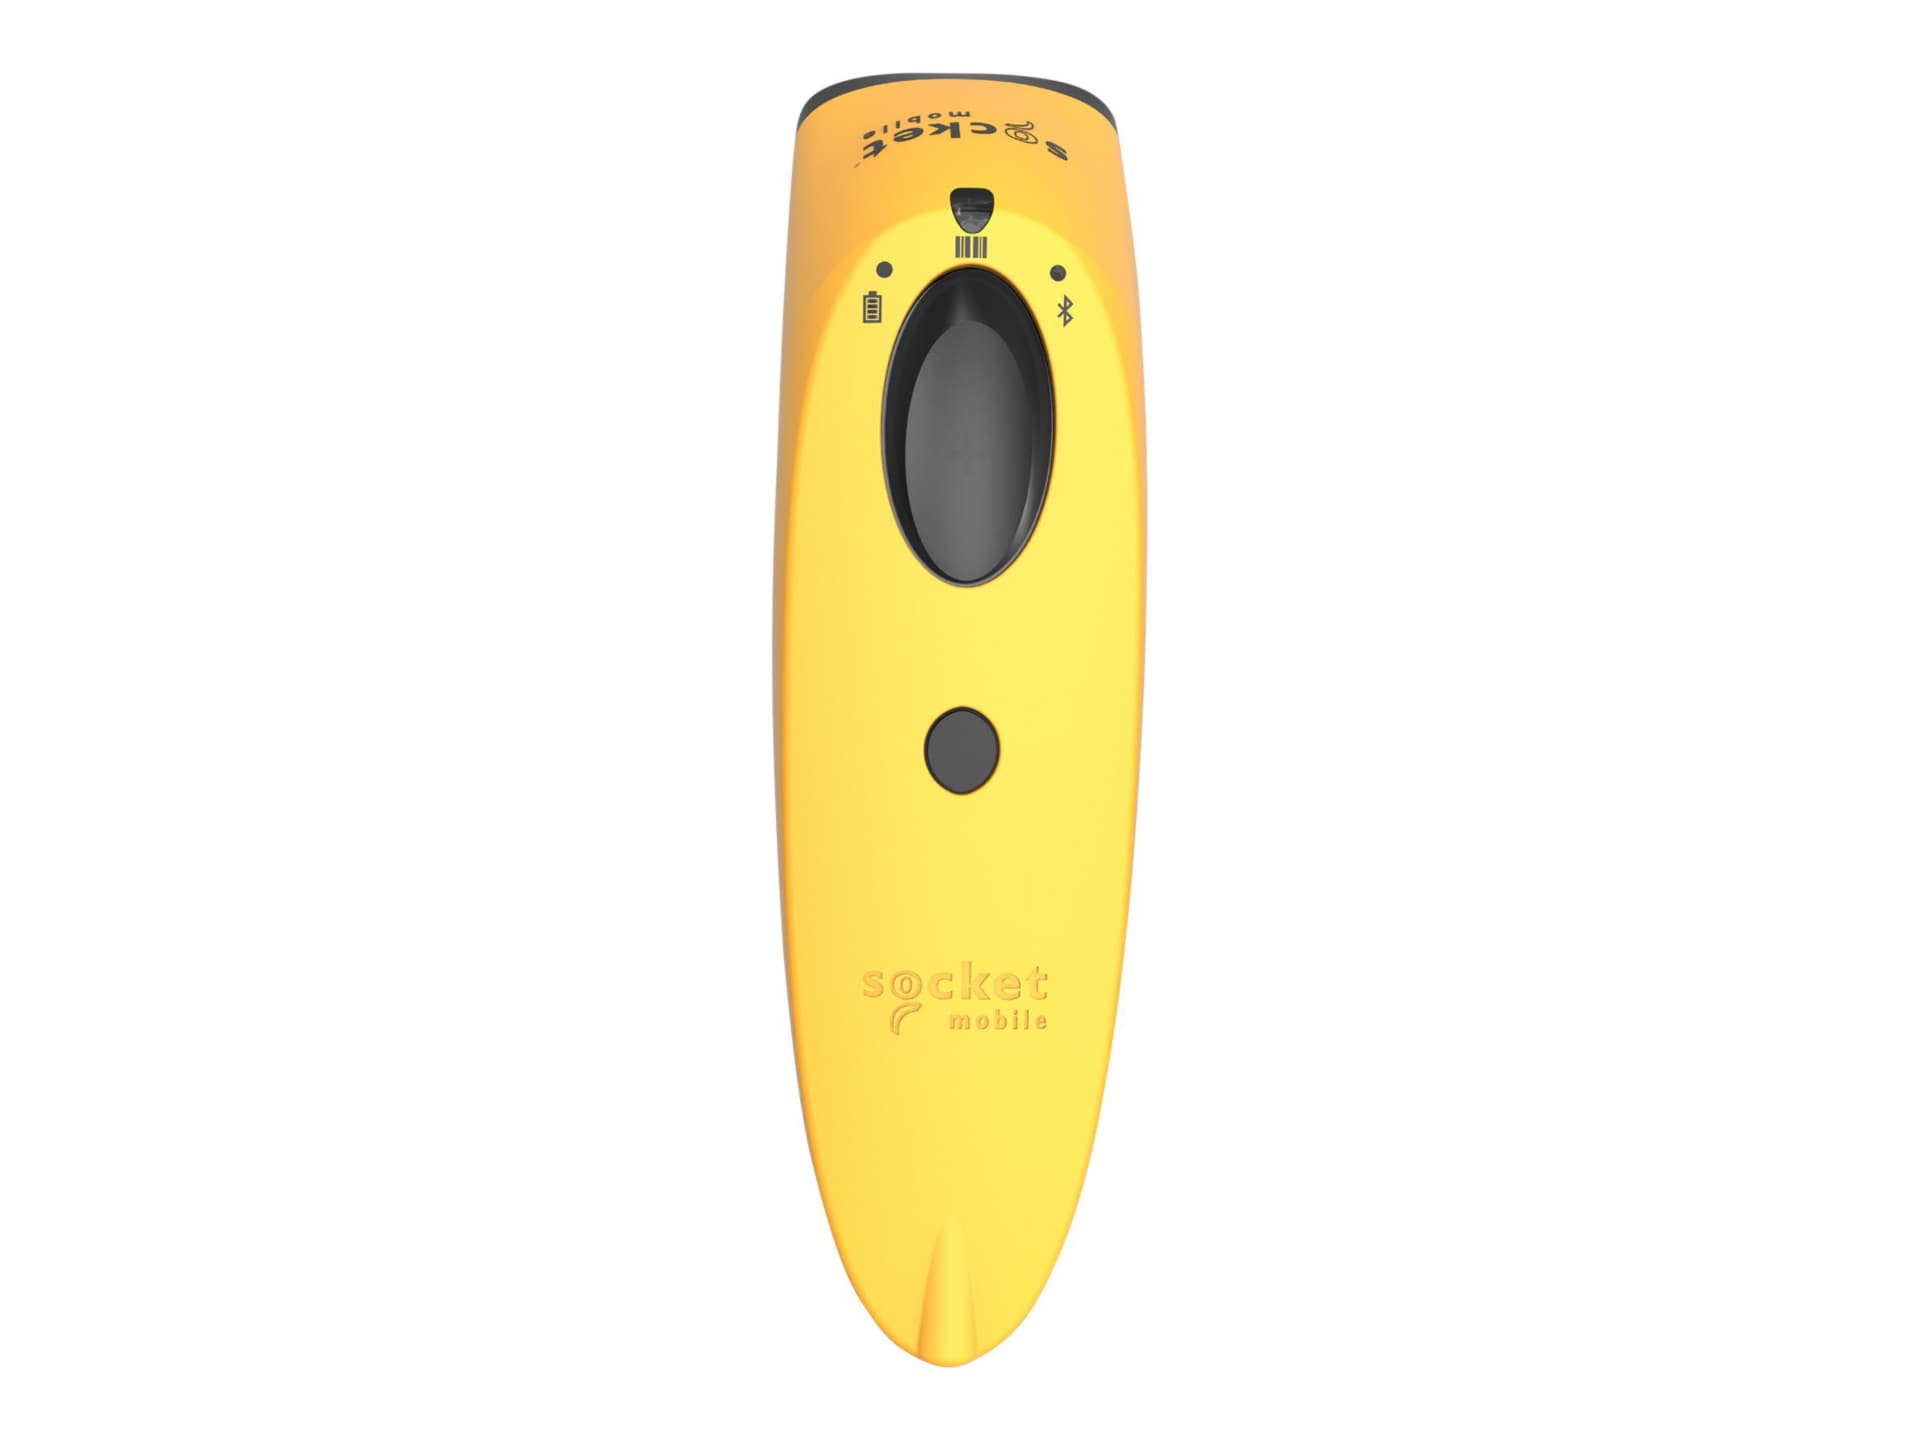 Socket S730 1D Wireless Laser Barcode Scanner - Yellow